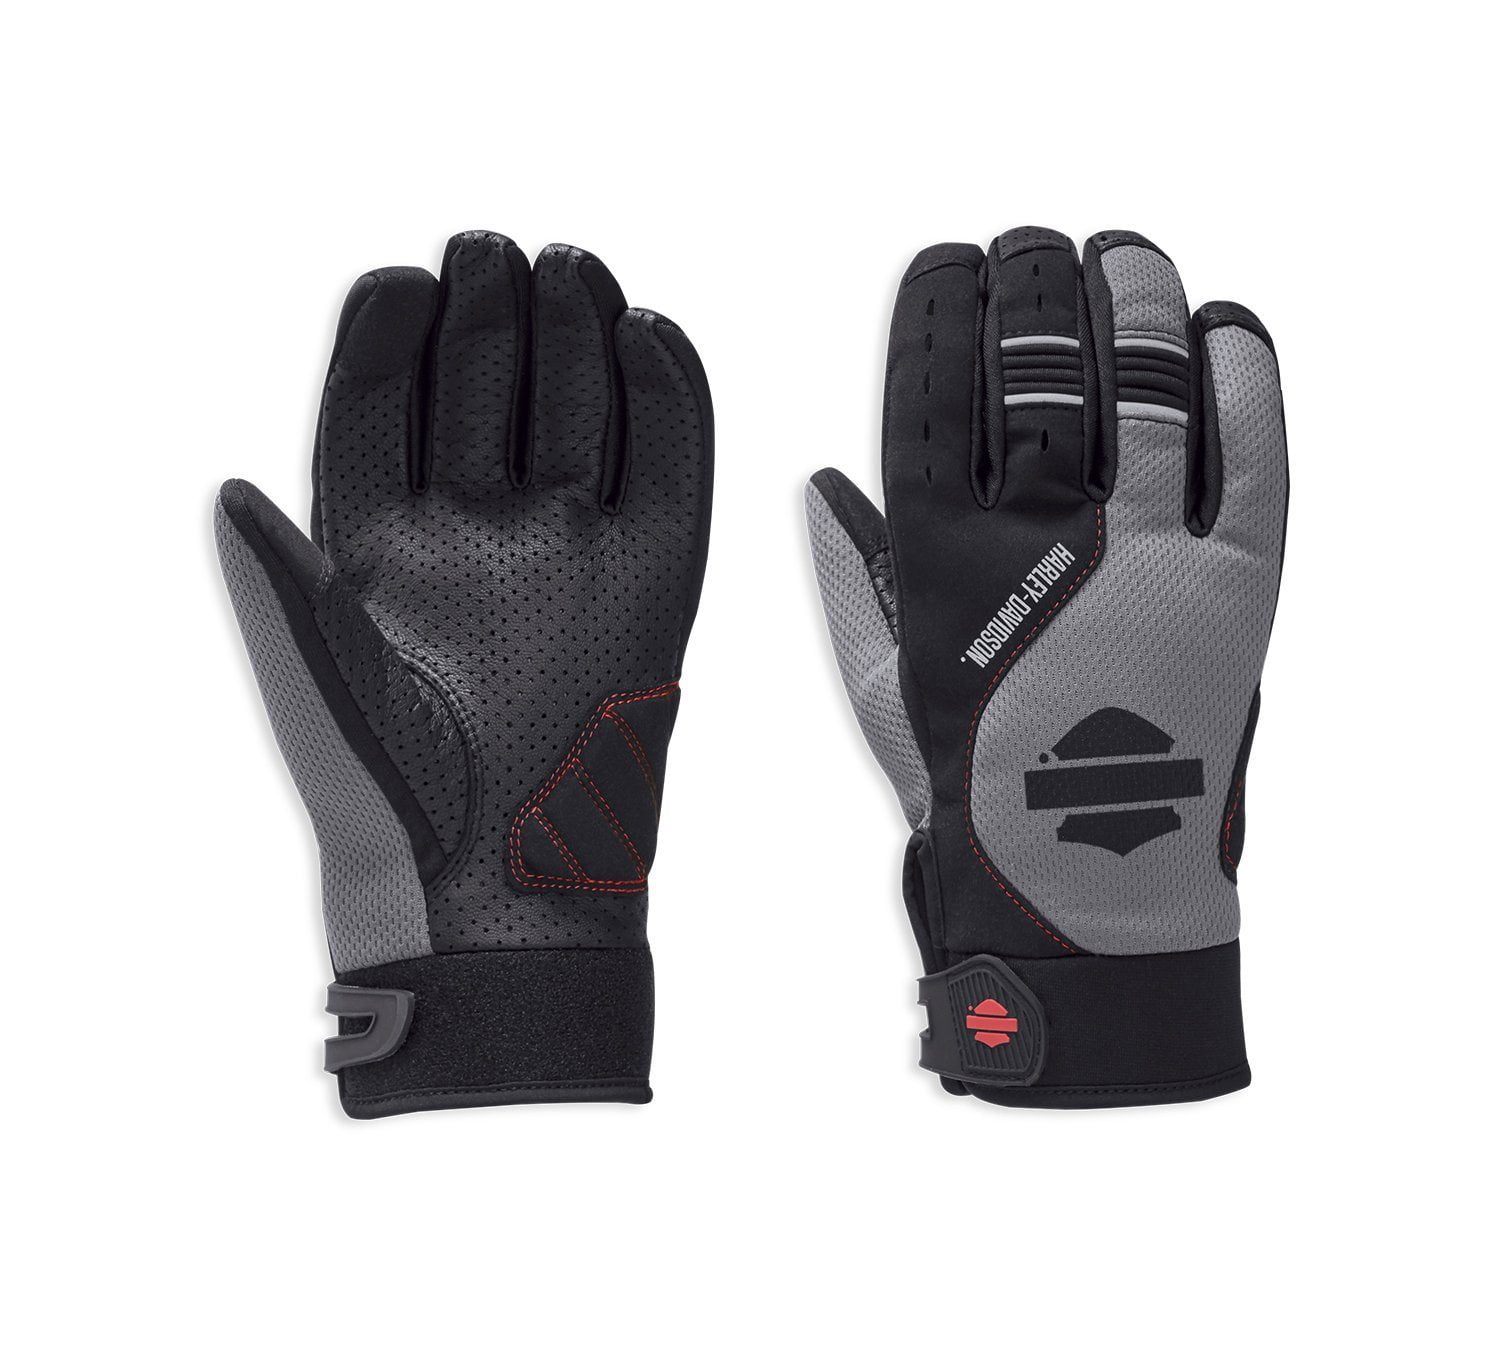 Harley Davidson Men S Grandview Mesh Amp Leather Gloves 97149 19vm Walmart Com